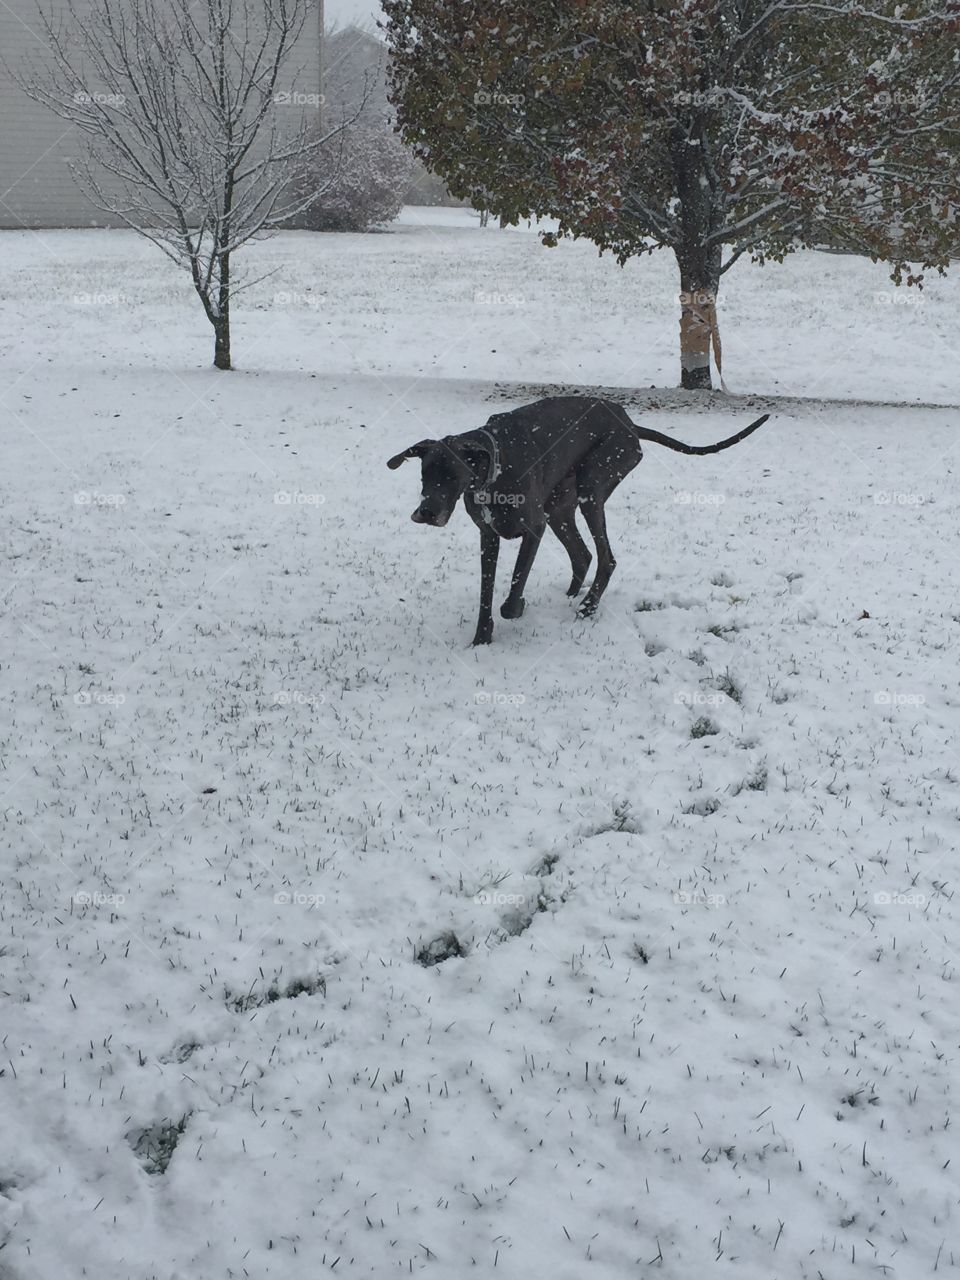 Dashing through the snow 